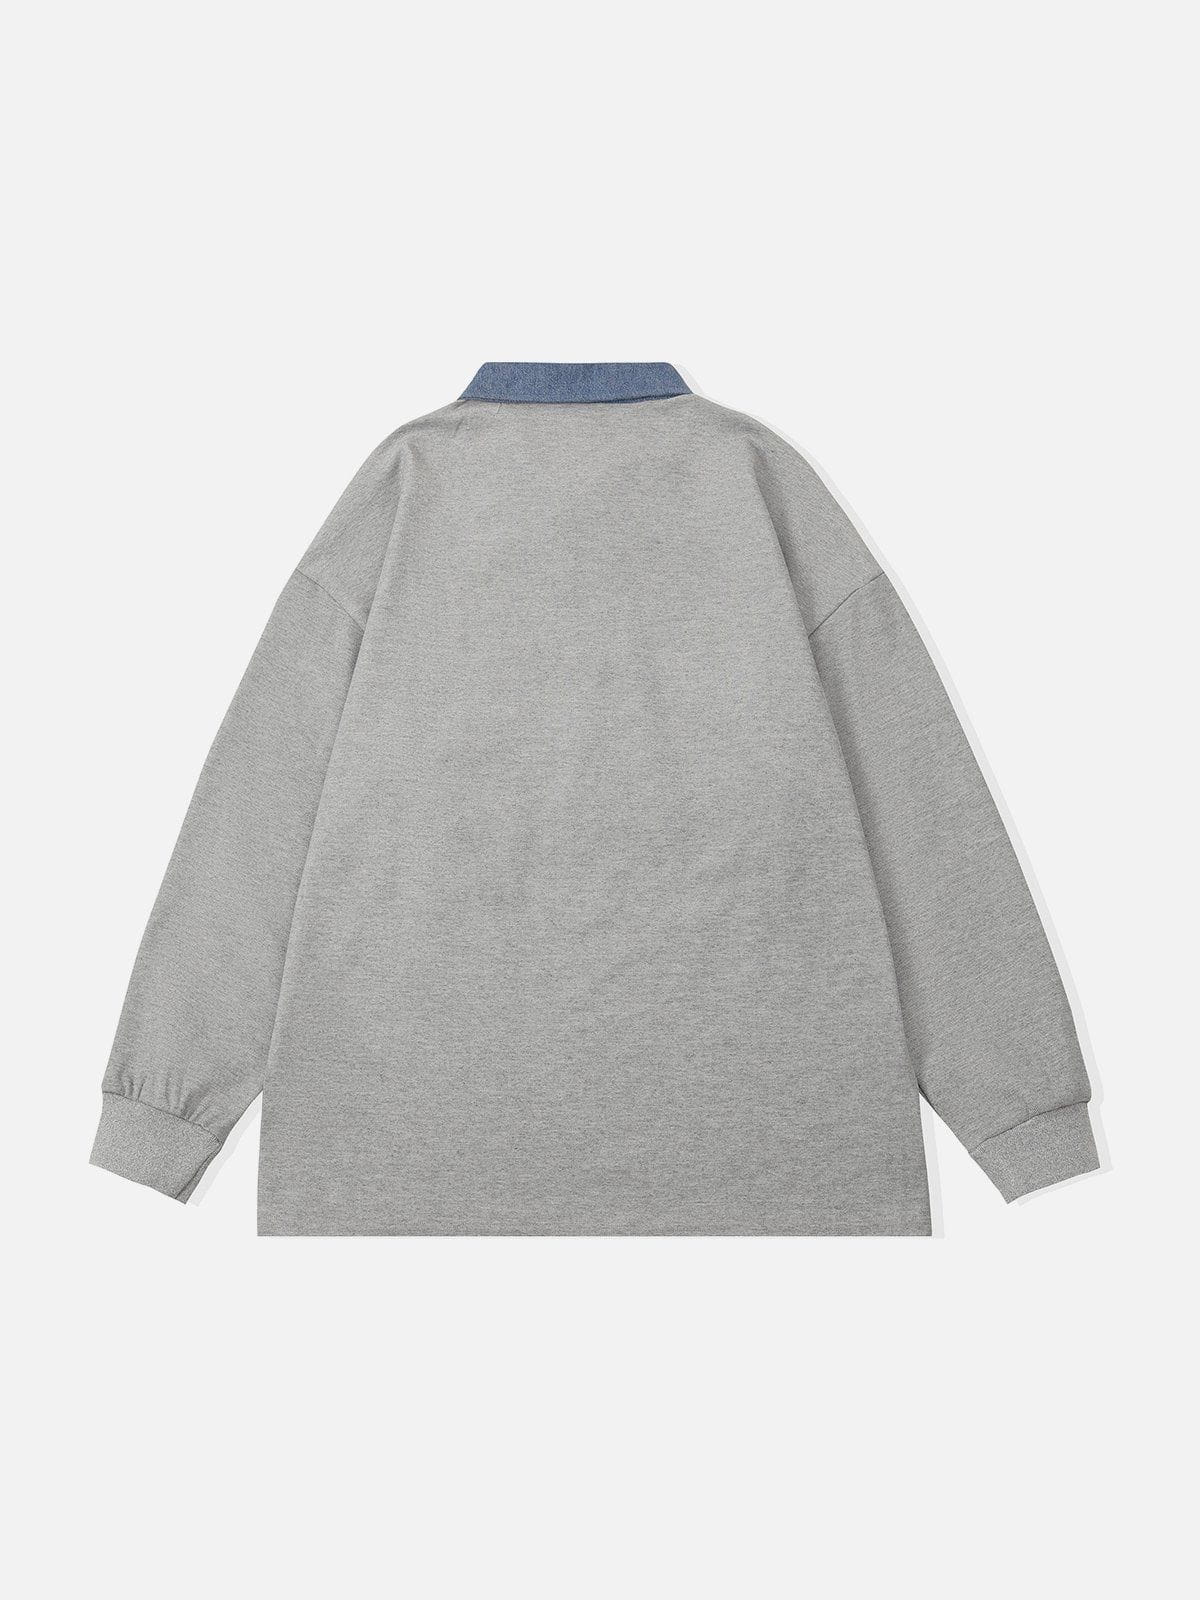 LUXENFY™ - "VAS" Half Zip Polo Collar Sweatshirt luxenfy.com